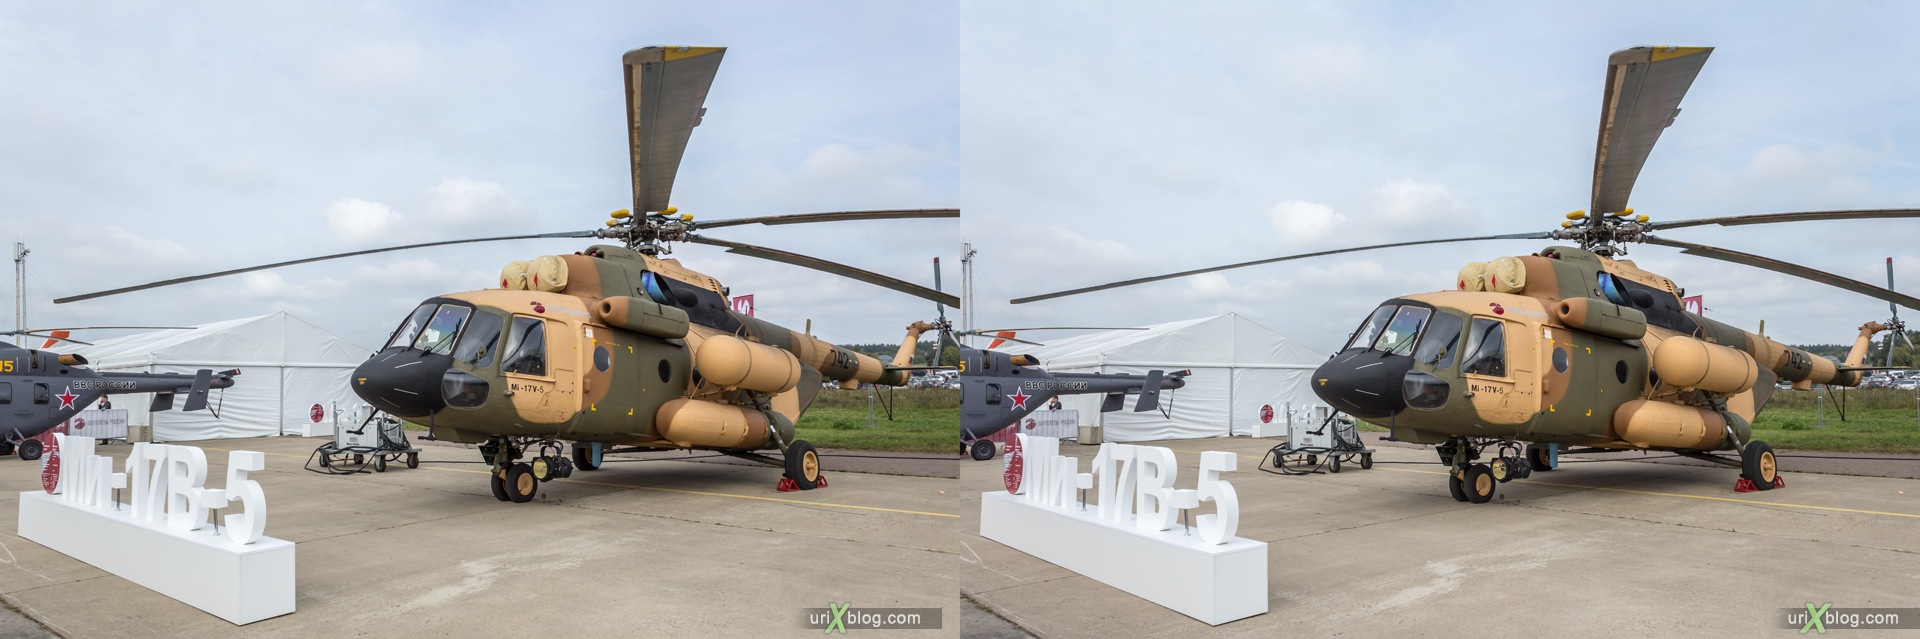 2013, MAKS, International Aviation and Space Salon, Russia, Ramenskoye airfield, Mi-17V-5, helicopter, 3D, stereo pair, cross-eyed, crossview, cross view stereo pair, stereoscopic